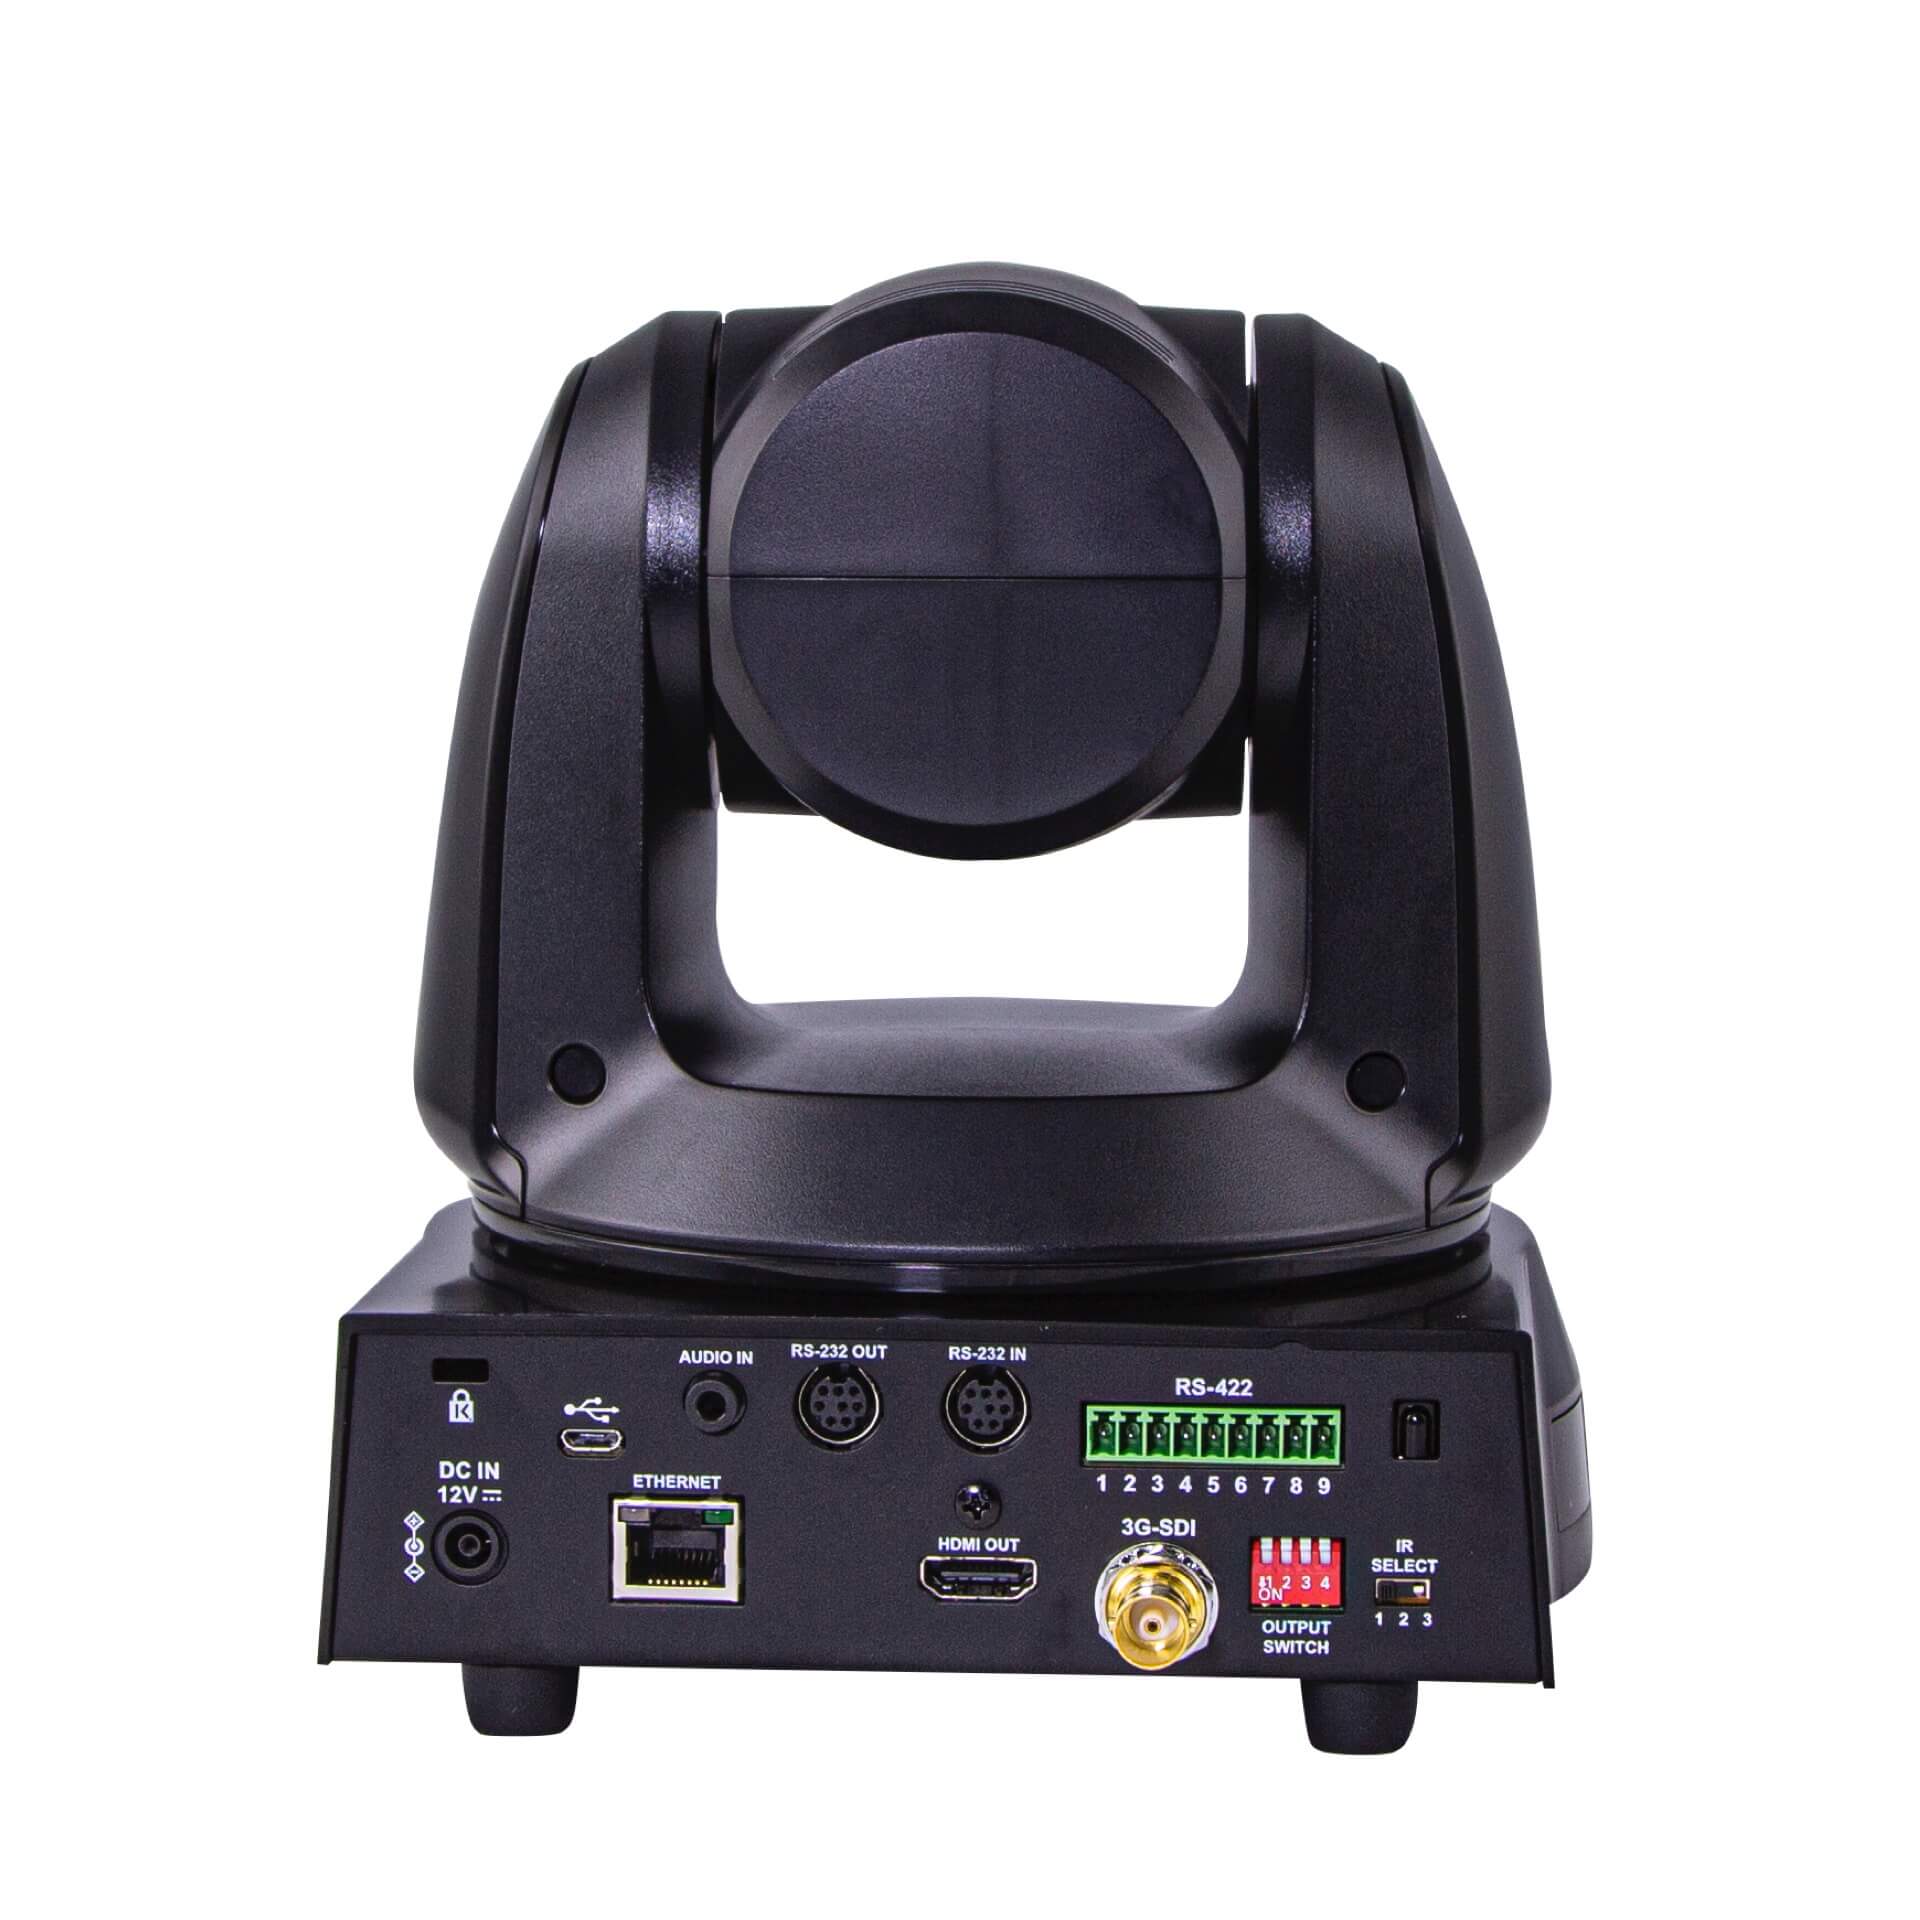 Marshall CV620-BI - Full-HD IP PTZ Video Camera with 20x Optical Zoom, rear